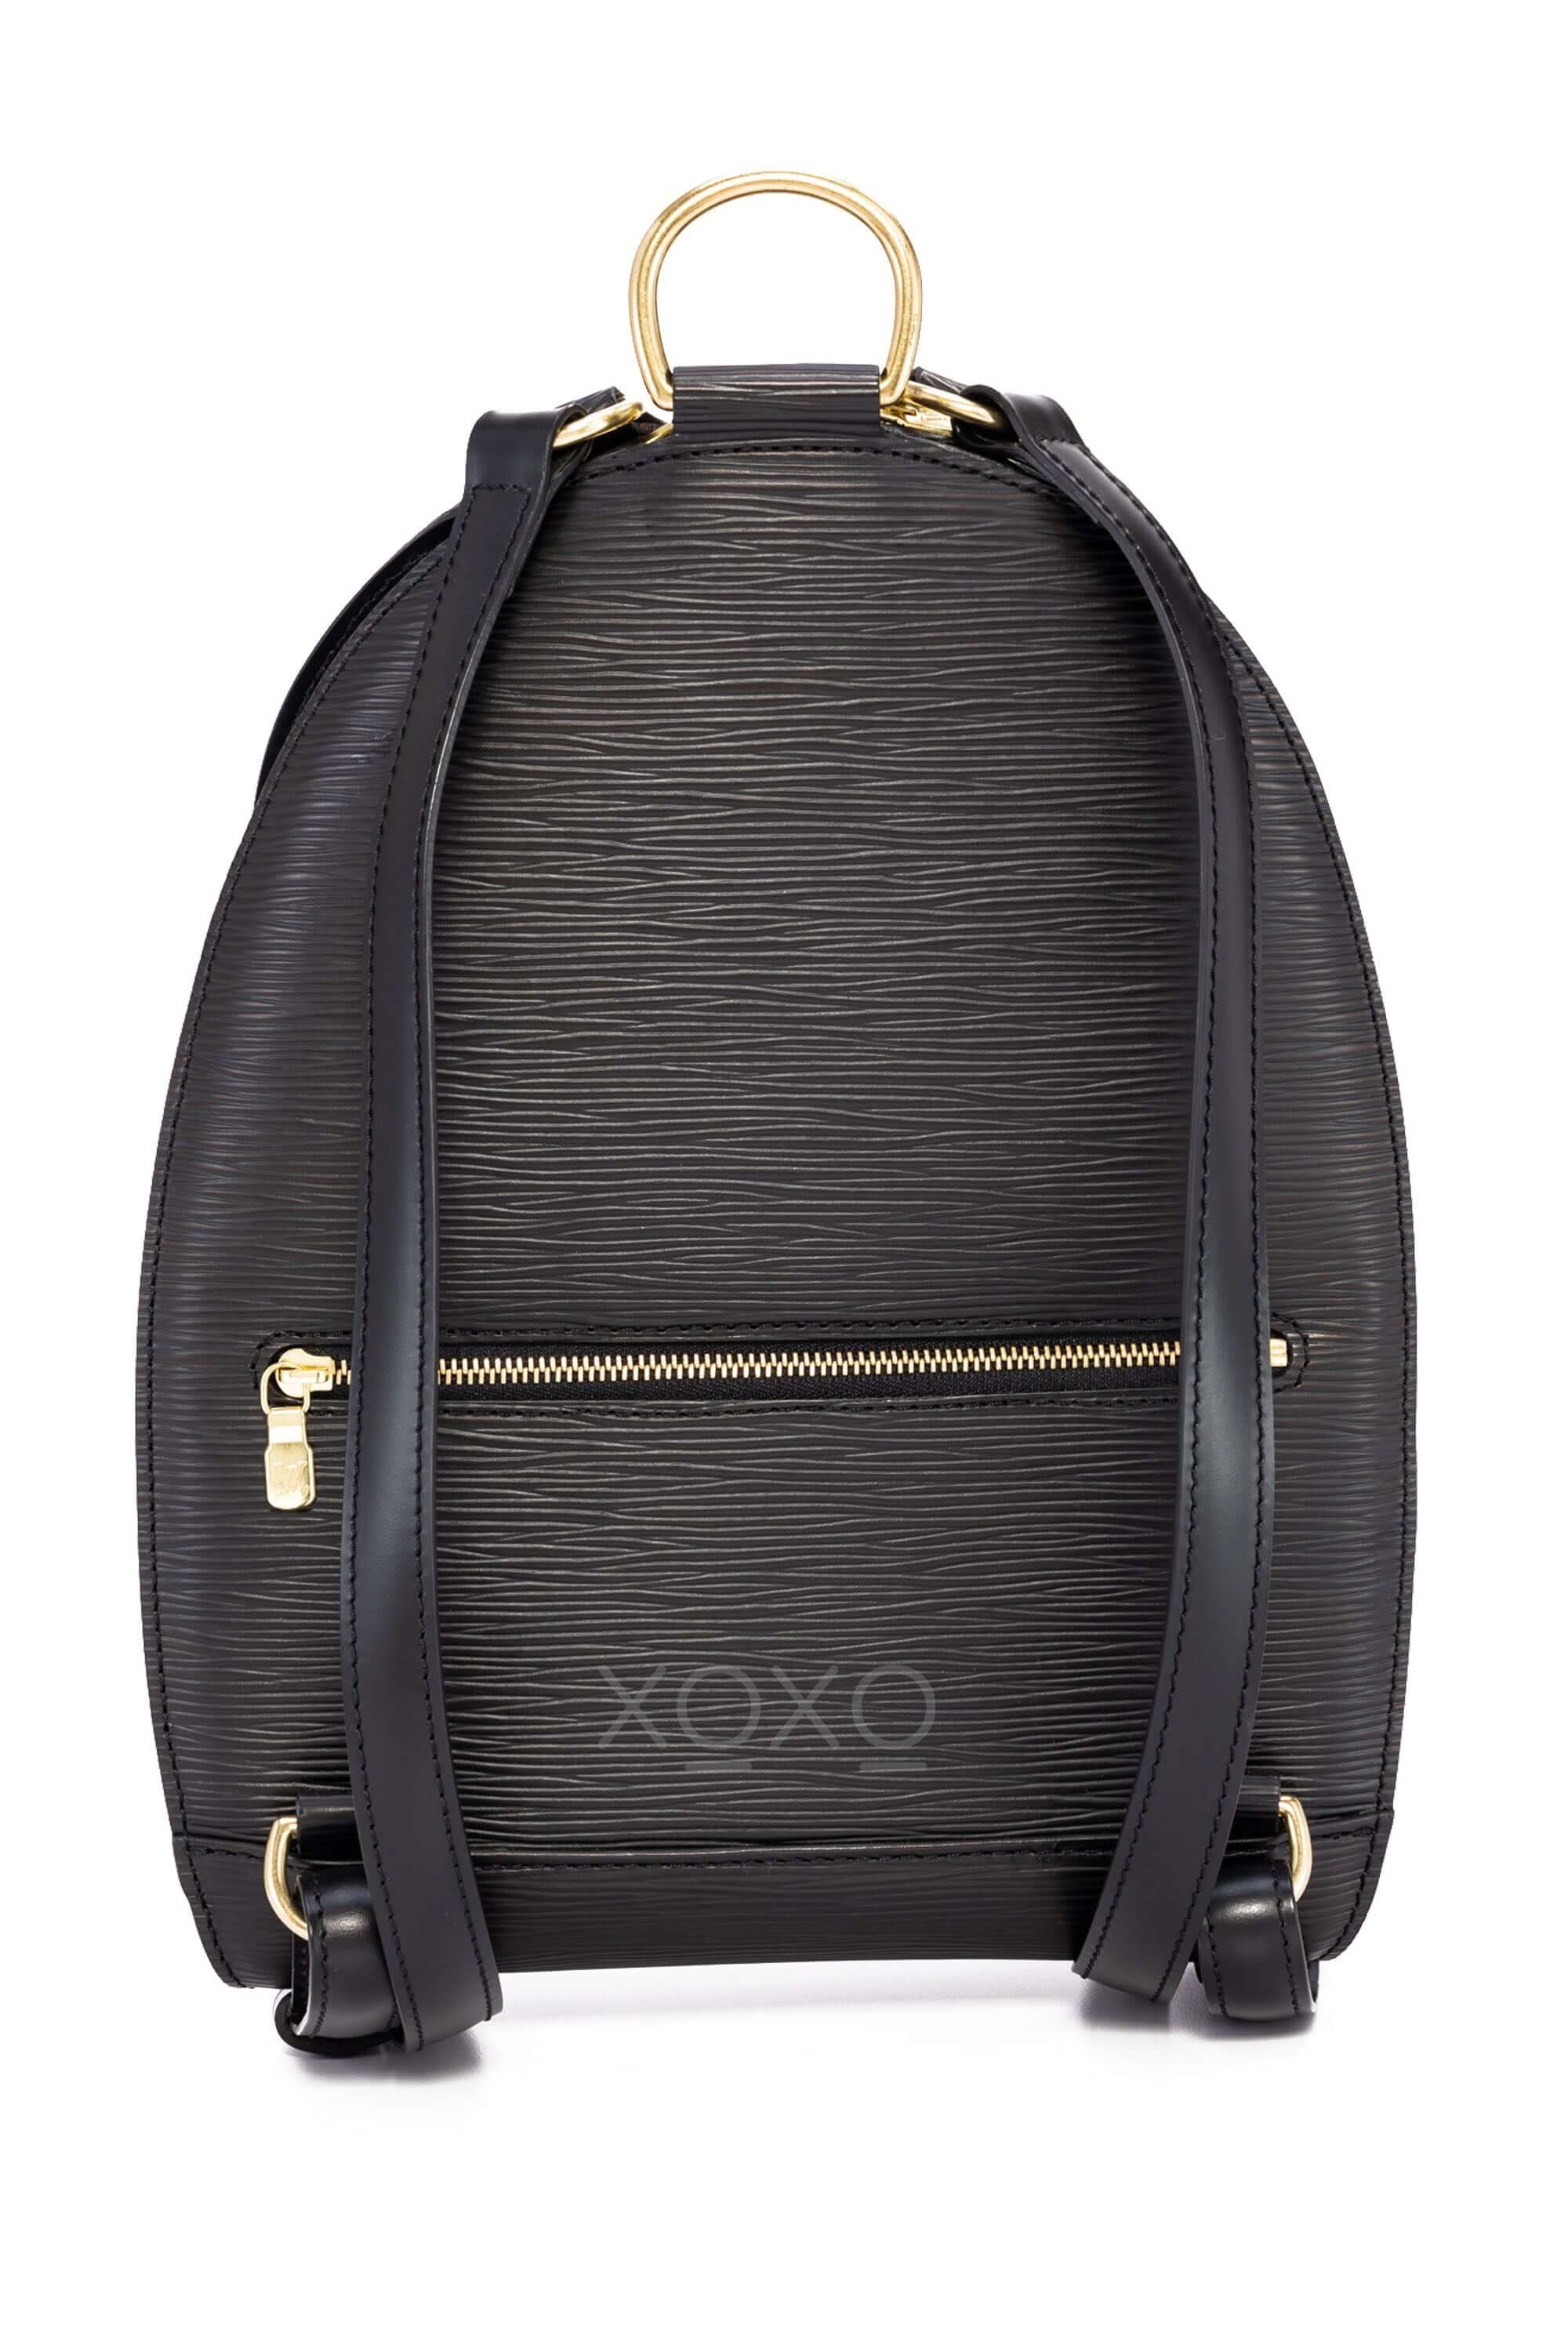 Louis Vuitton Epi Mabillon Back Pack Black M52232 Authentic From